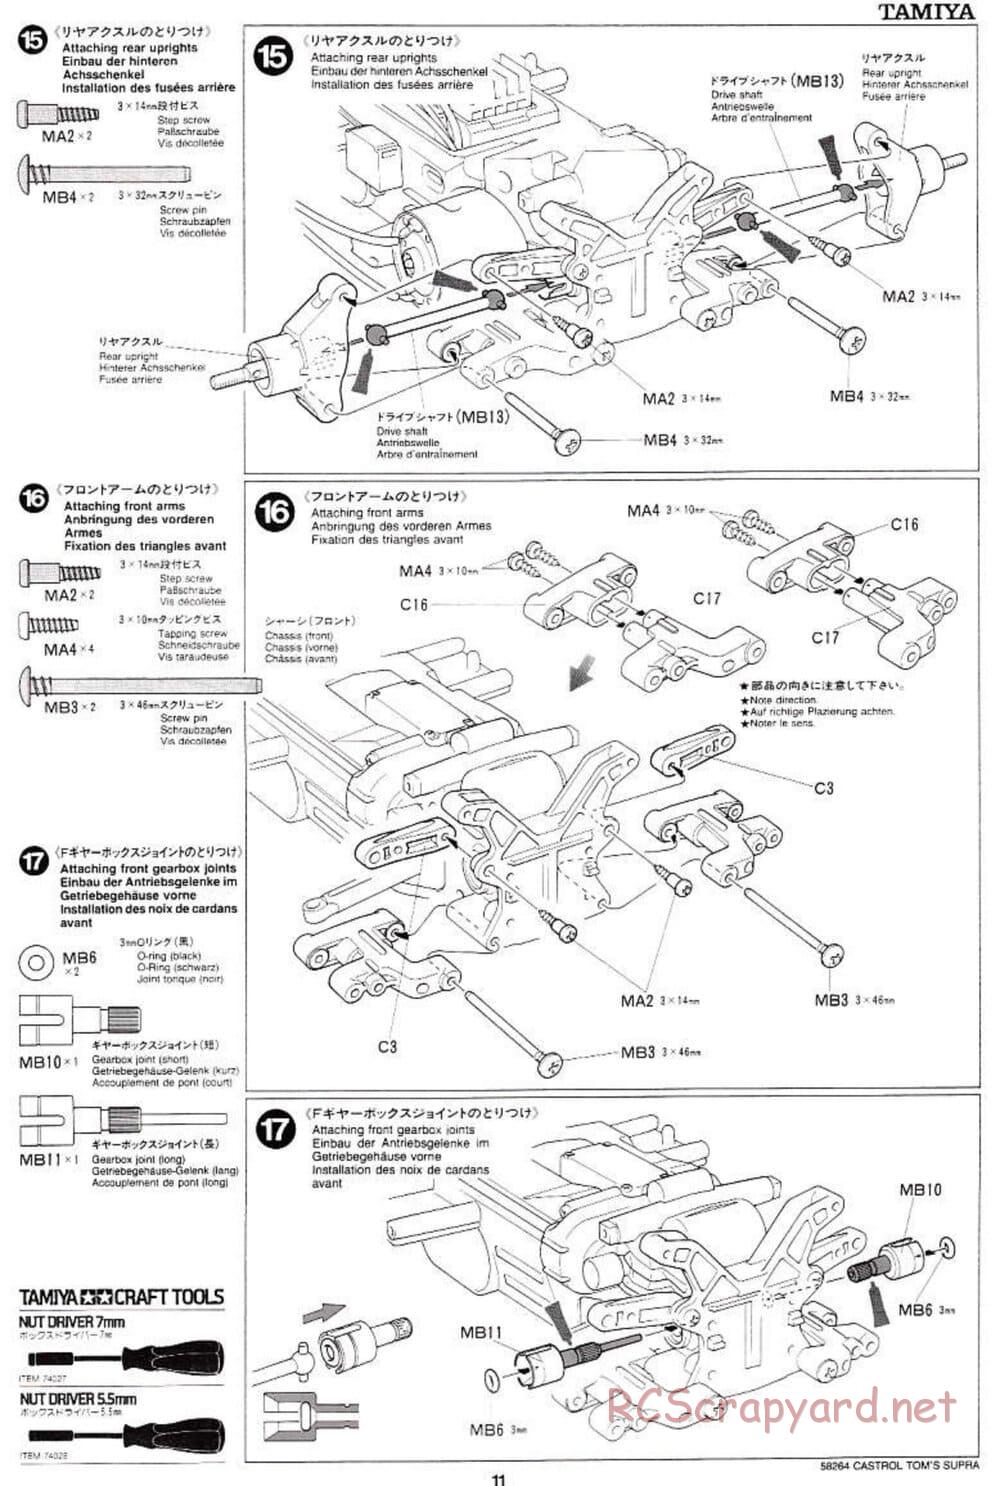 Tamiya - Castrol Tom's Supra 2000 - TL-01 Chassis - Manual - Page 11